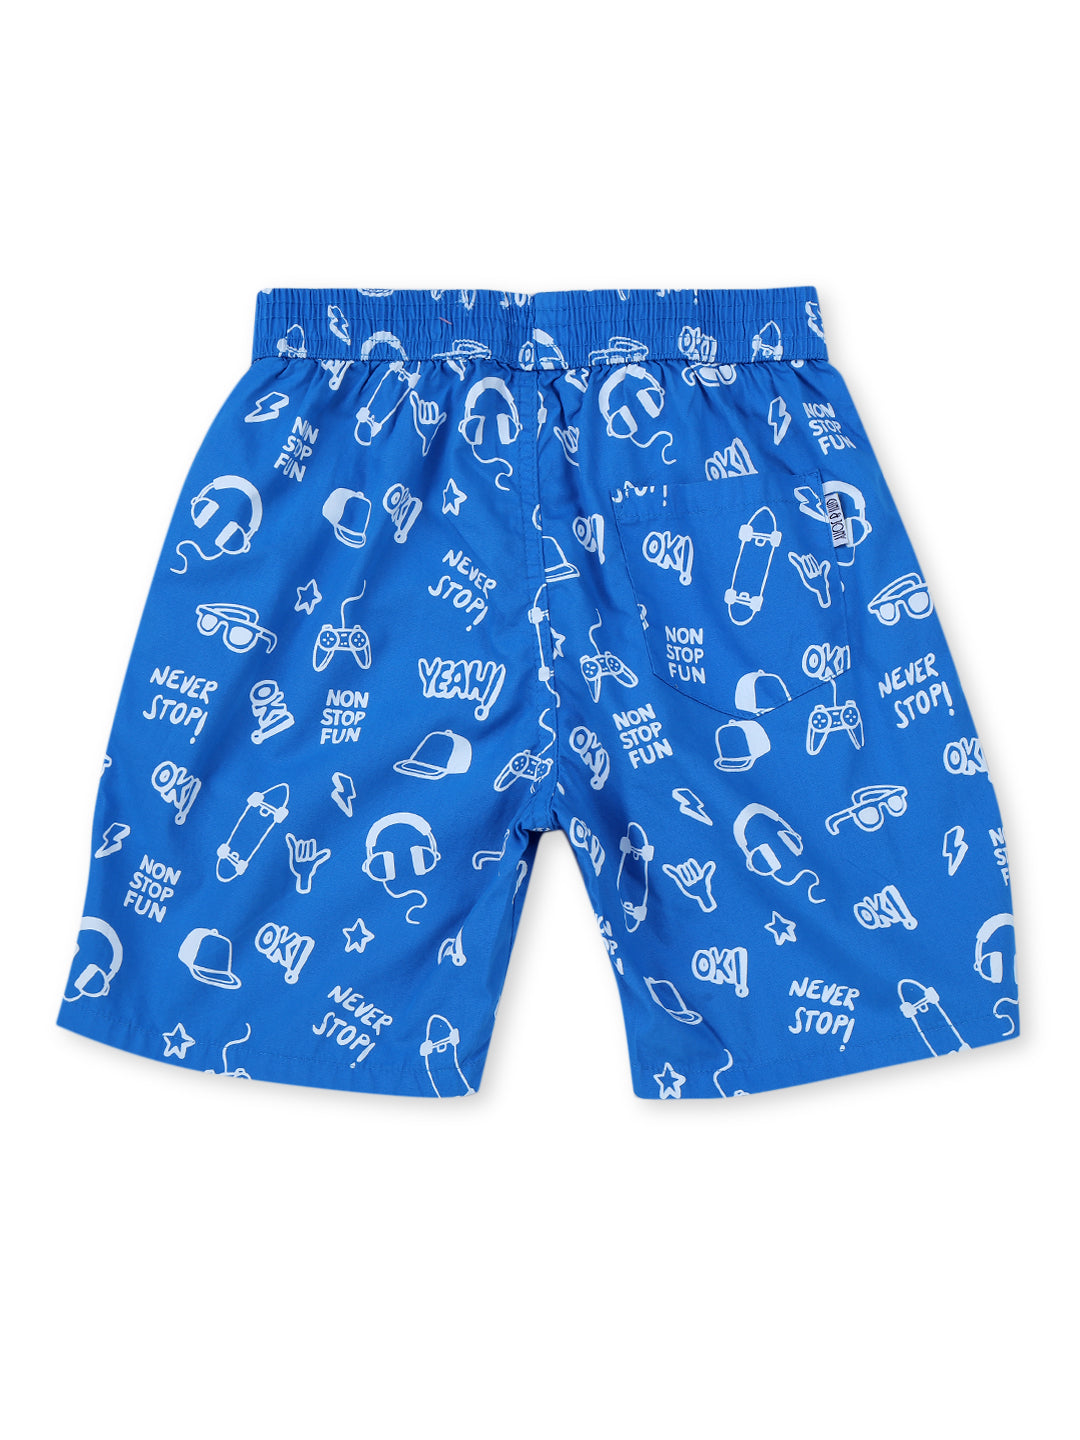 Boys Blue Cotton Printed Boxer Shorts